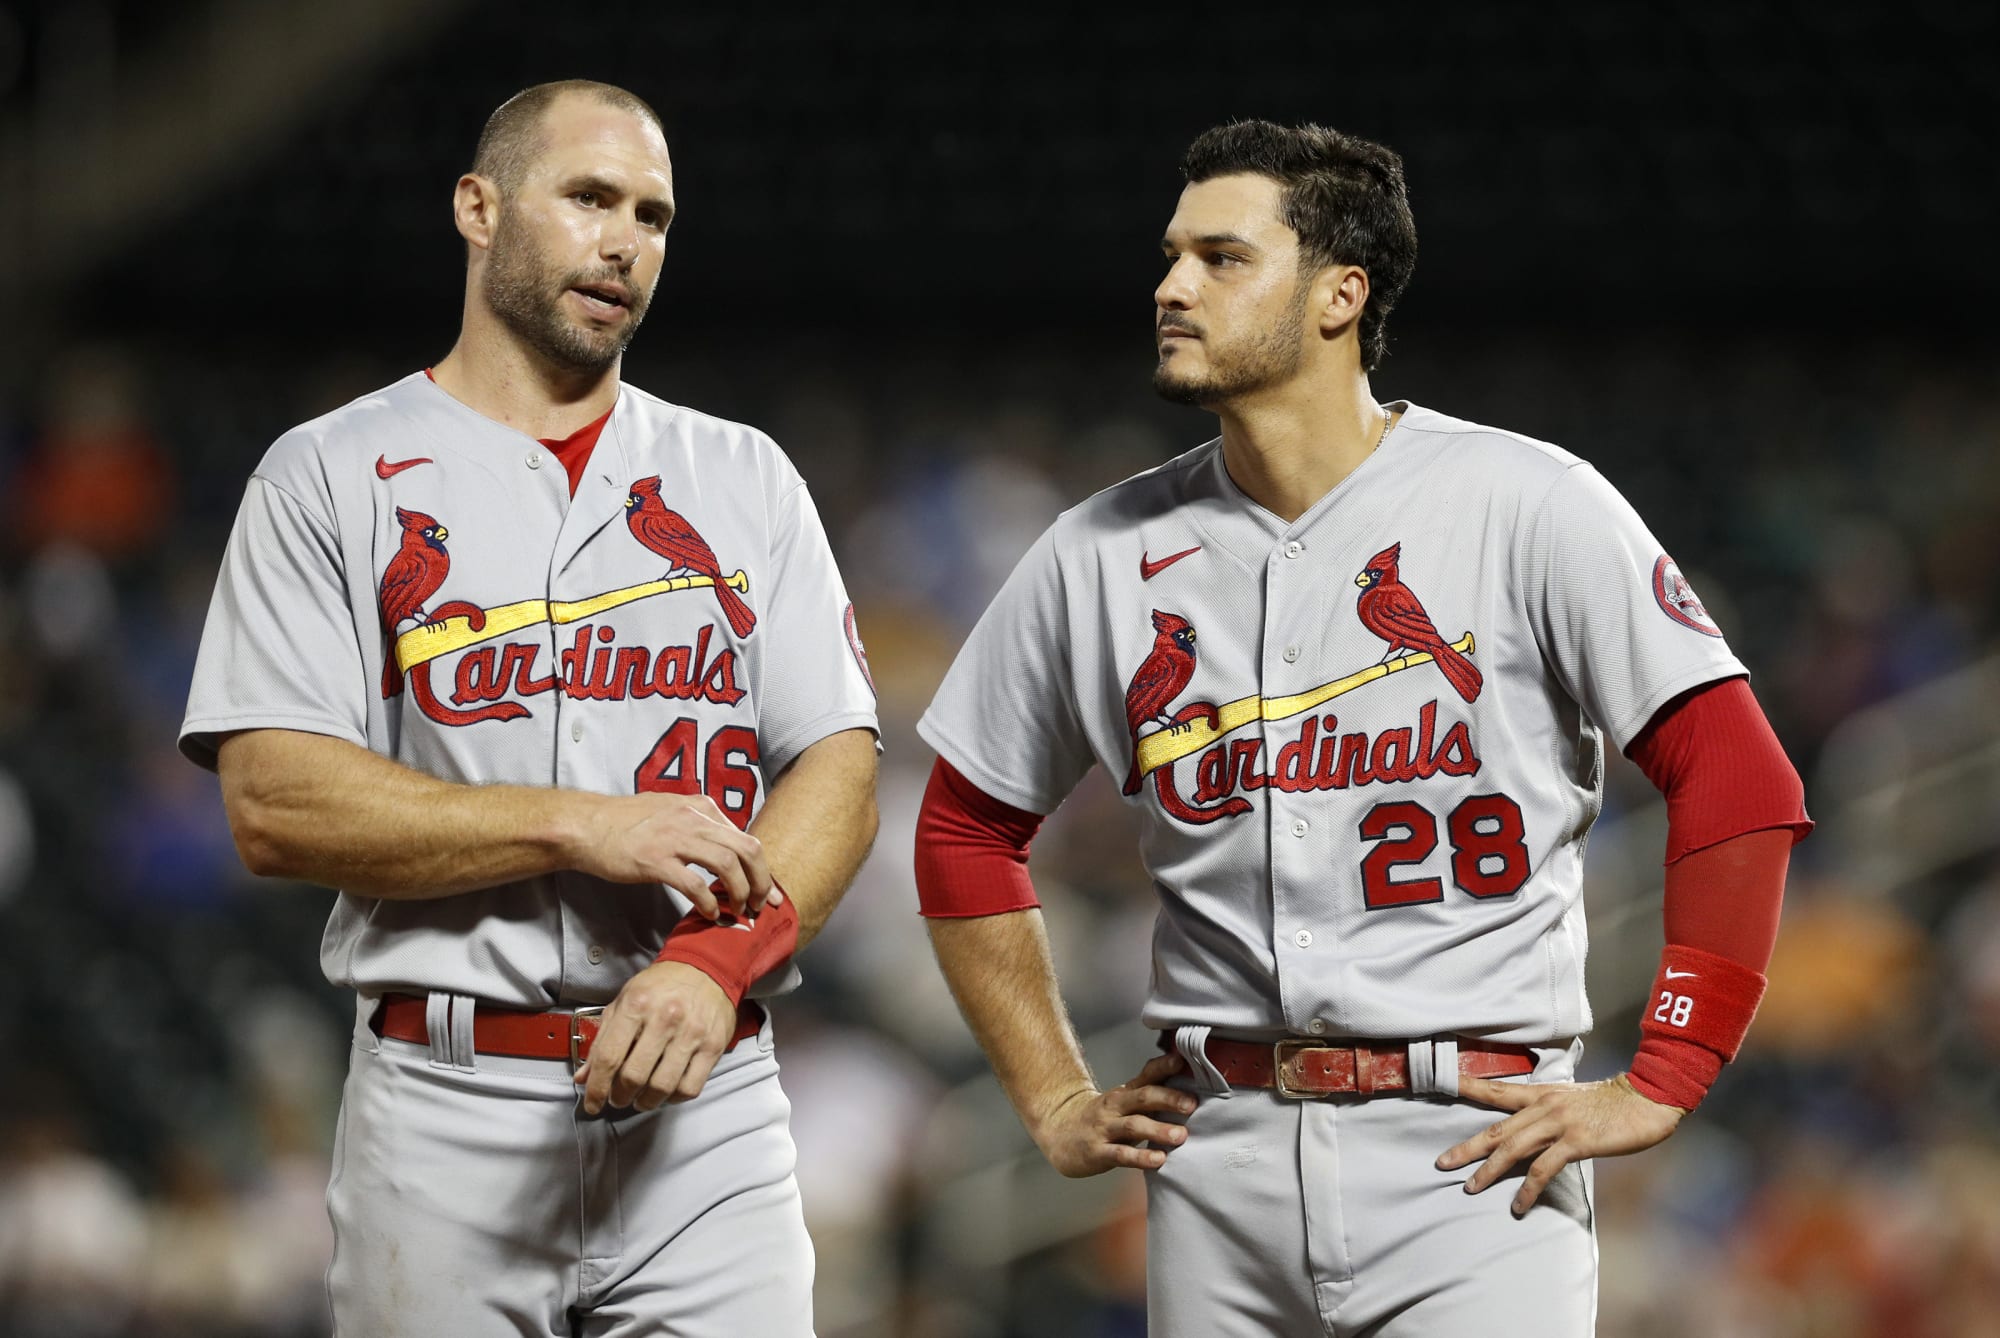 Nolan Arenado and Paul Goldschmidt are leading the St. Louis Cardinals